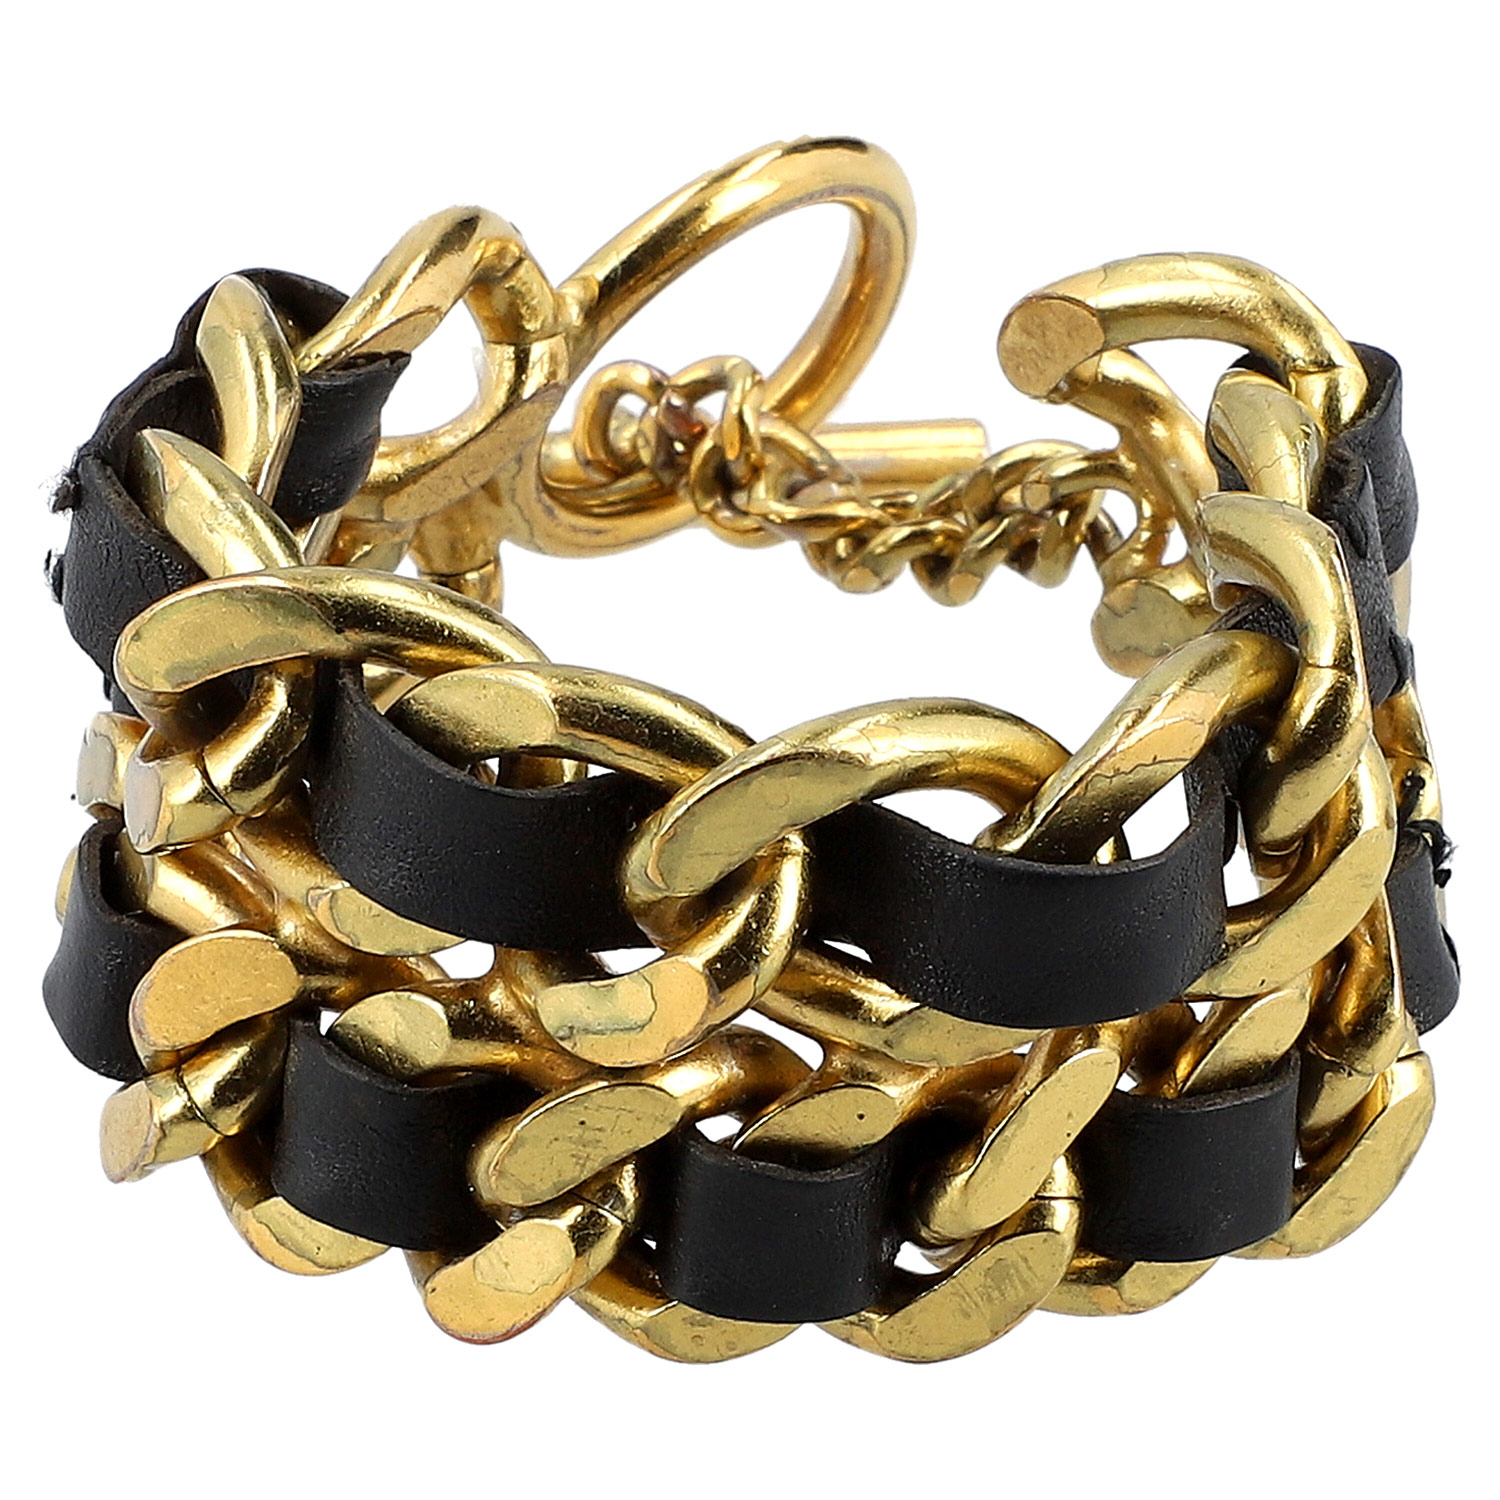 Bracelets  Cuffs  Costume jewelry  Fashion  CHANEL